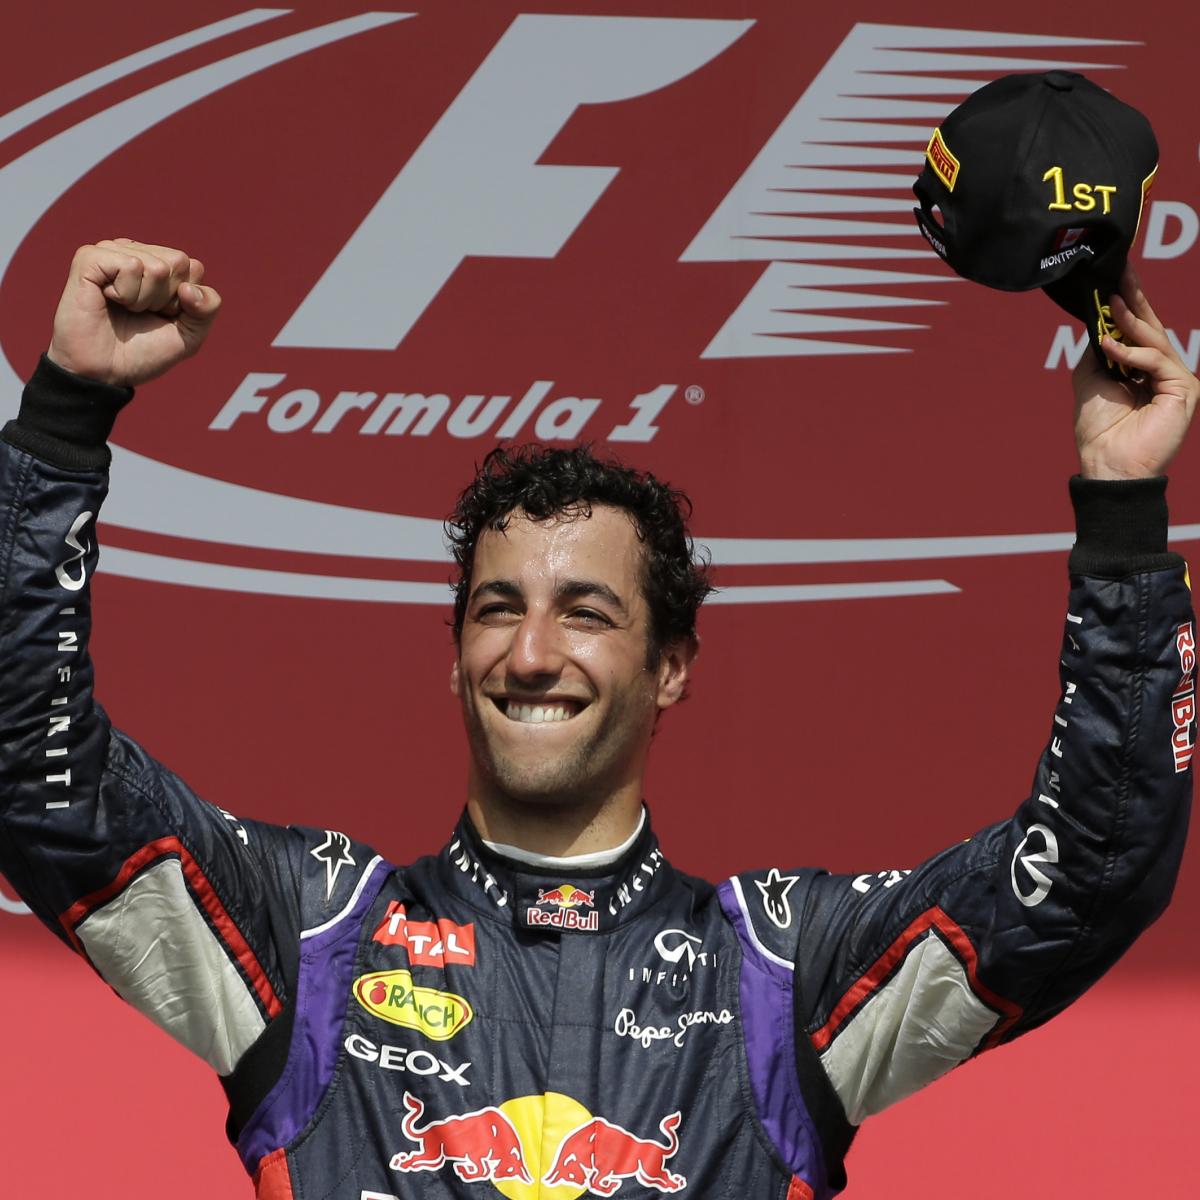 Daniel Ricciardo a World Champion-in-Waiting After Maiden Win at ...